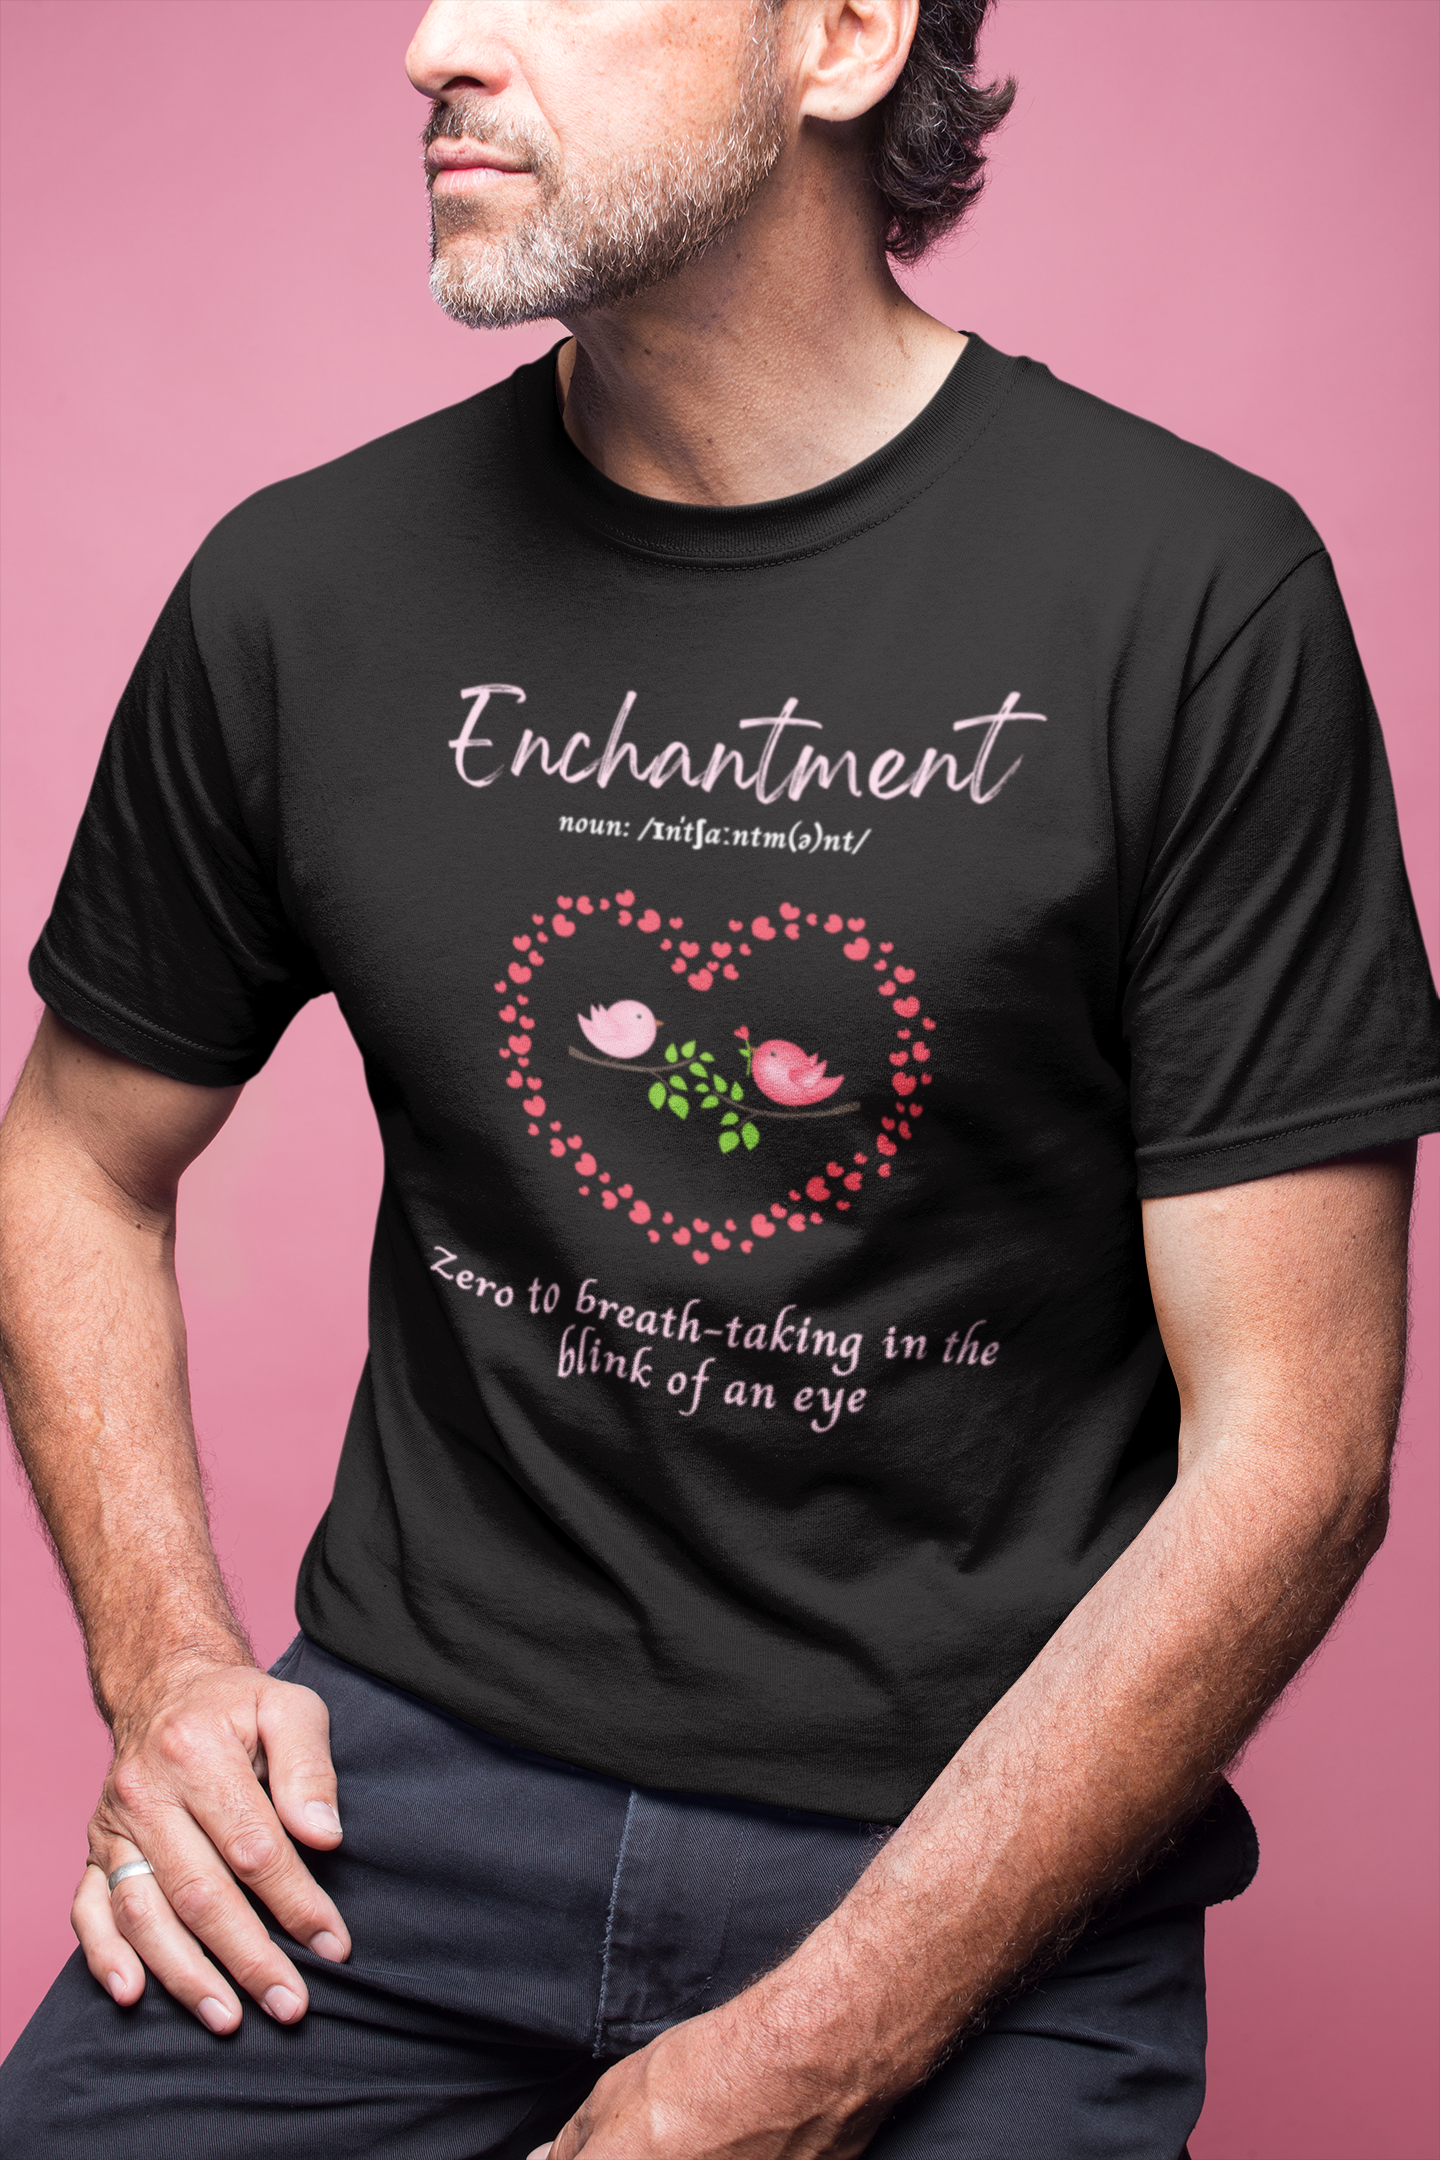 Enchantment - Premium cotton tee celebrating love...